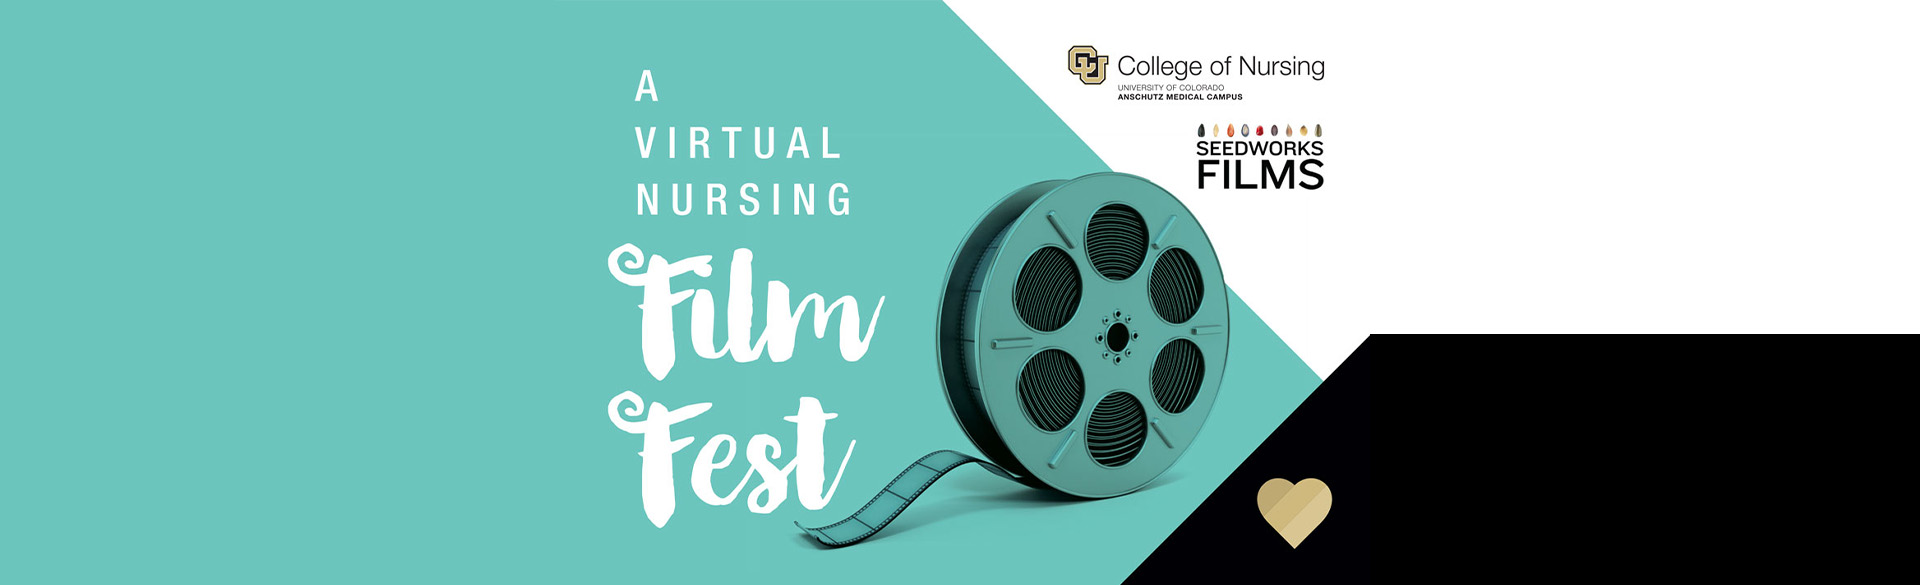 Virtual Film Festival Installment Highlights Nurse Practitioners